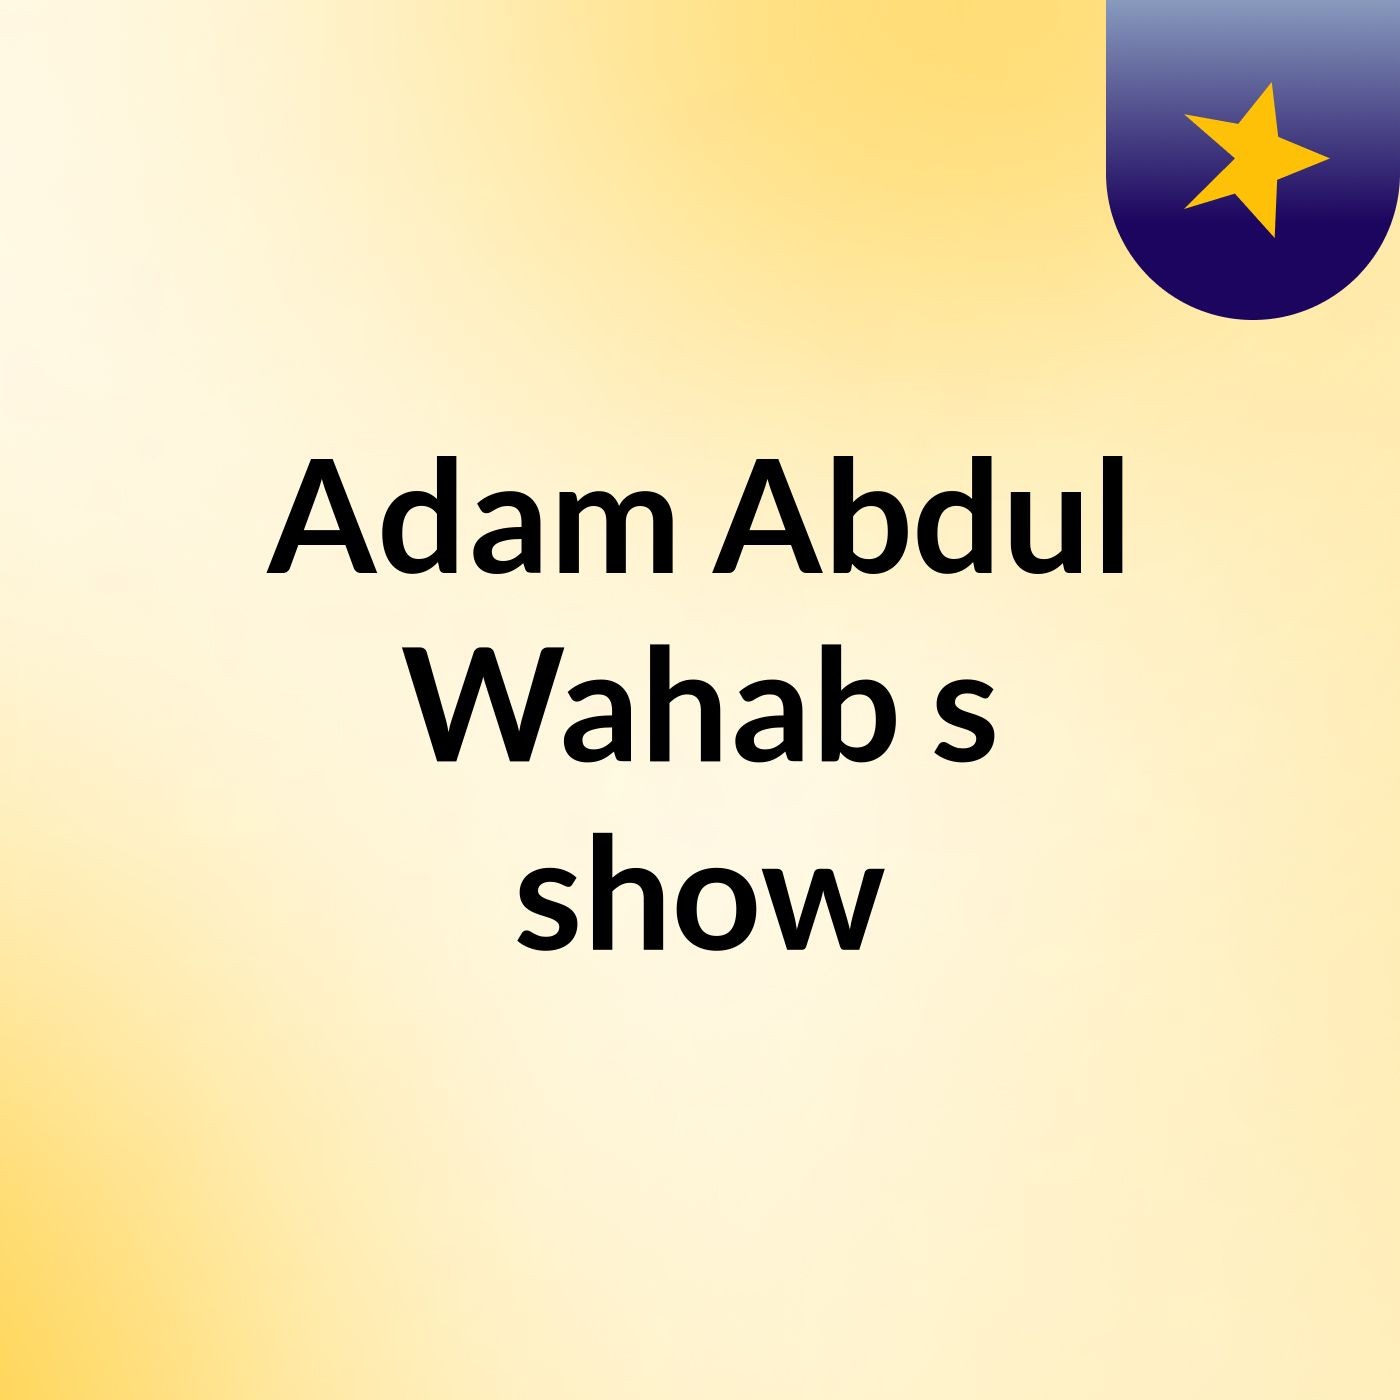 Adam Abdul Wahab's show